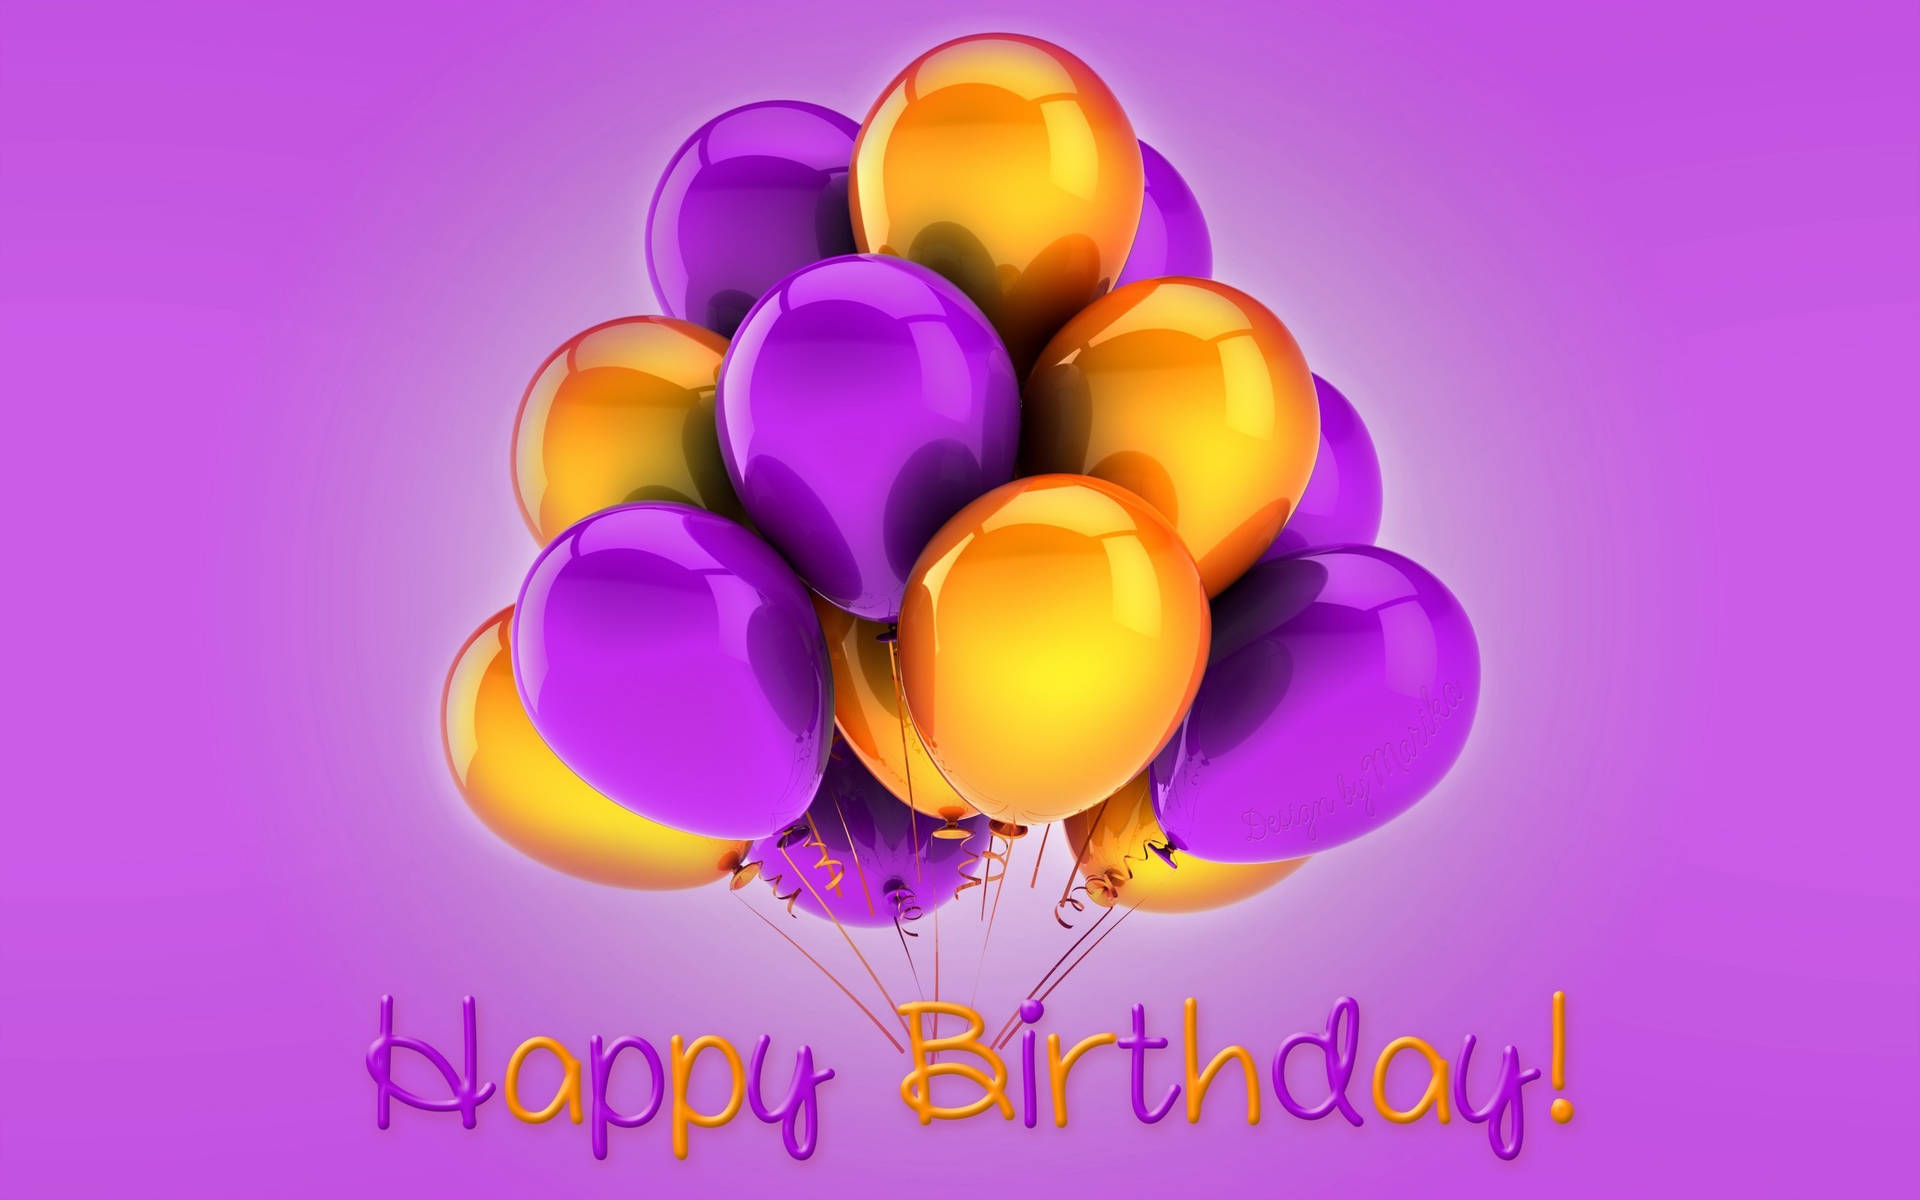 It's My Birthday Yellow And Purple